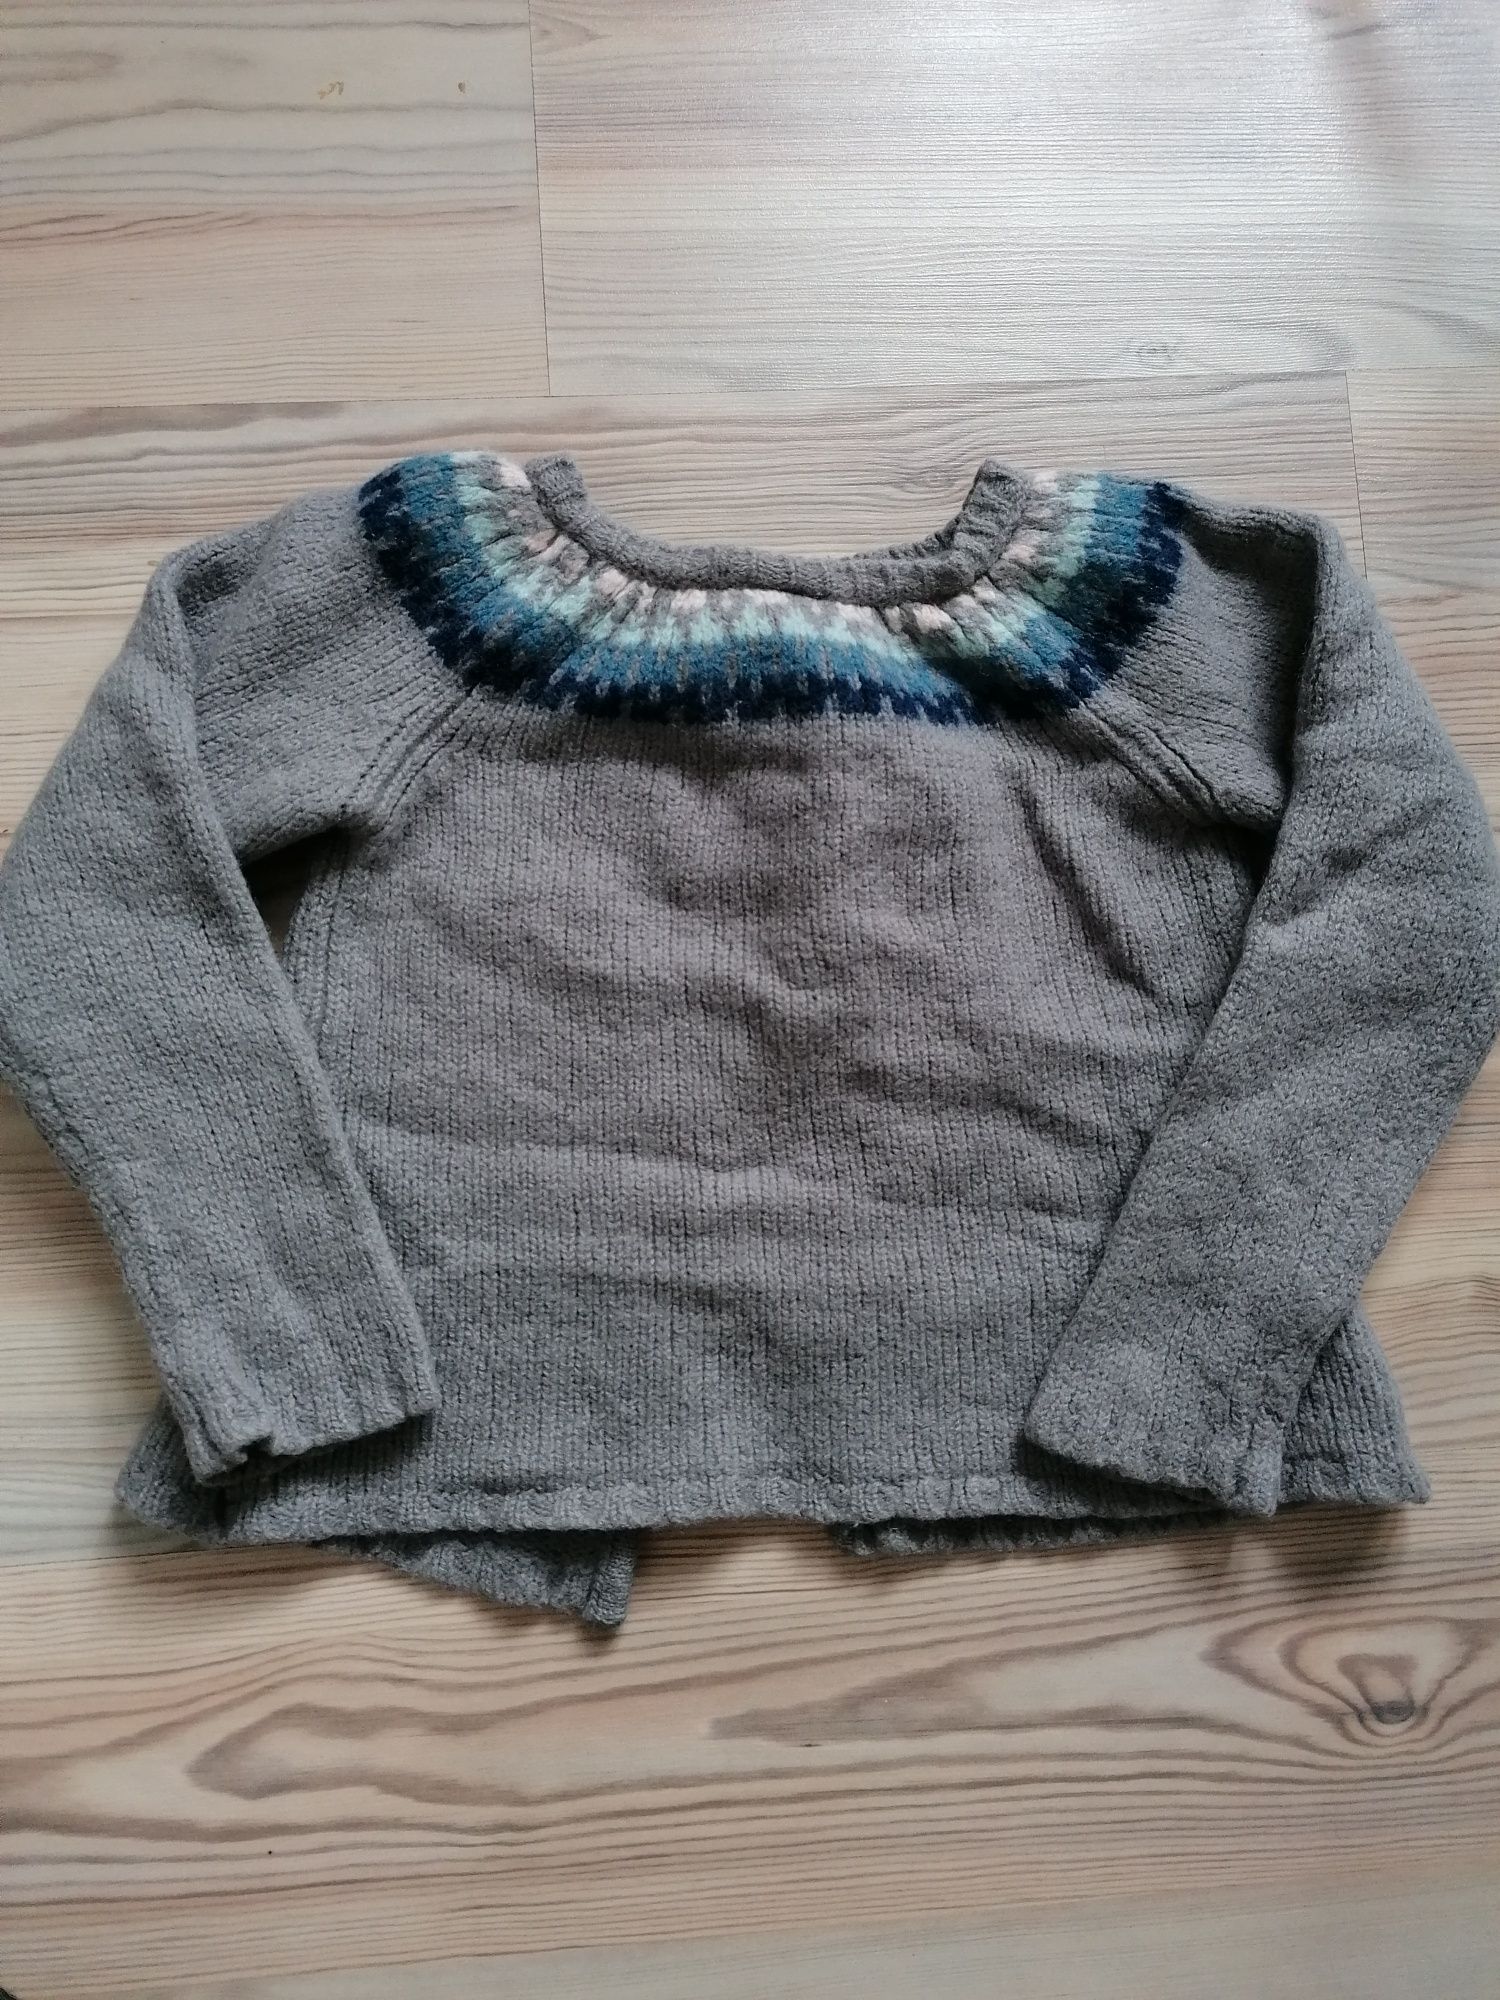 Szary wełniany sweter zapinany kardigan Noa Noa Miniature 122 7 lat